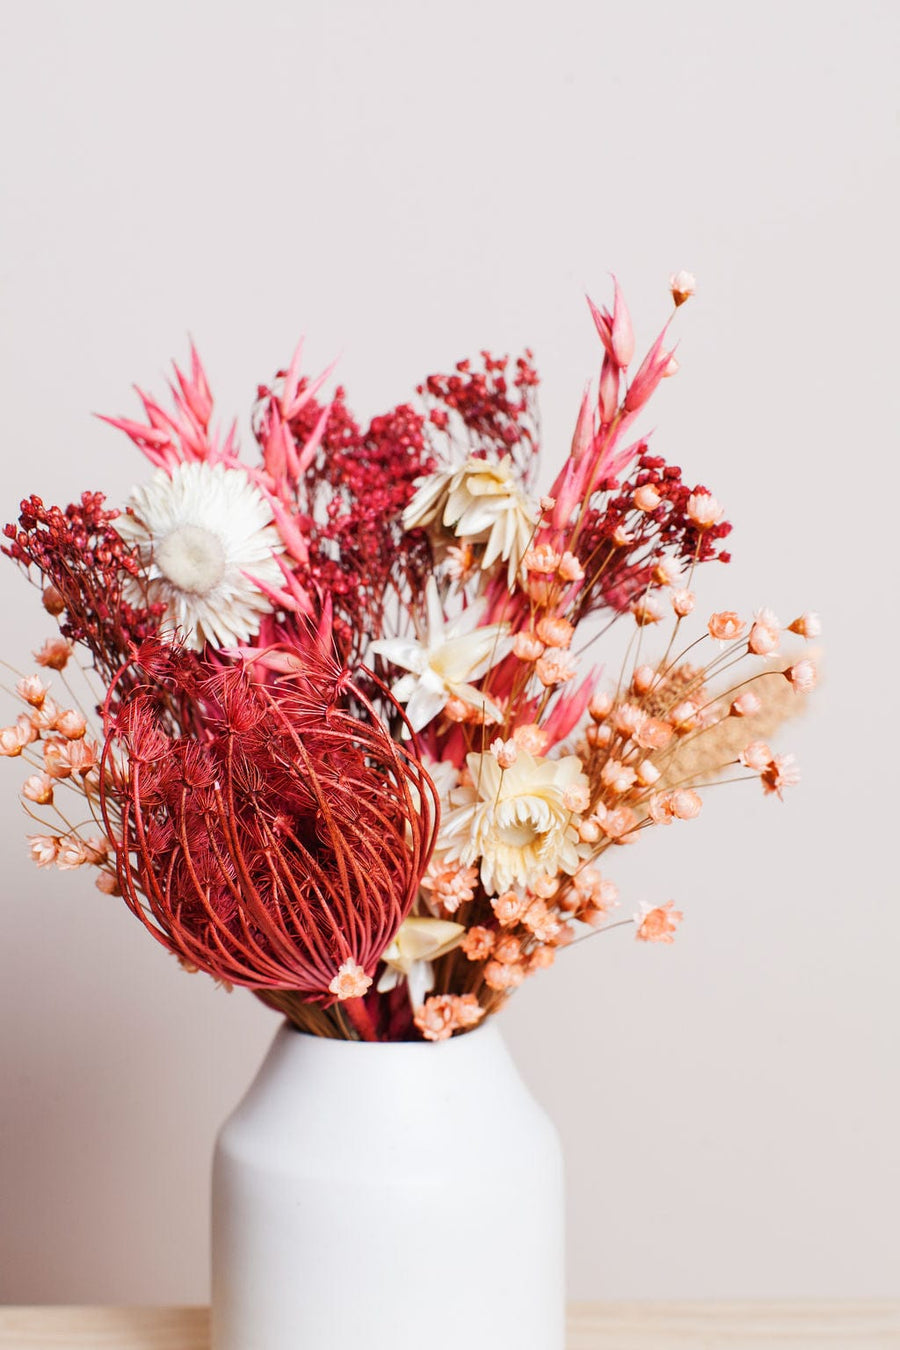 Idlewild Floral Co. Bouquets Strawberry Petit Bouquet with Vase